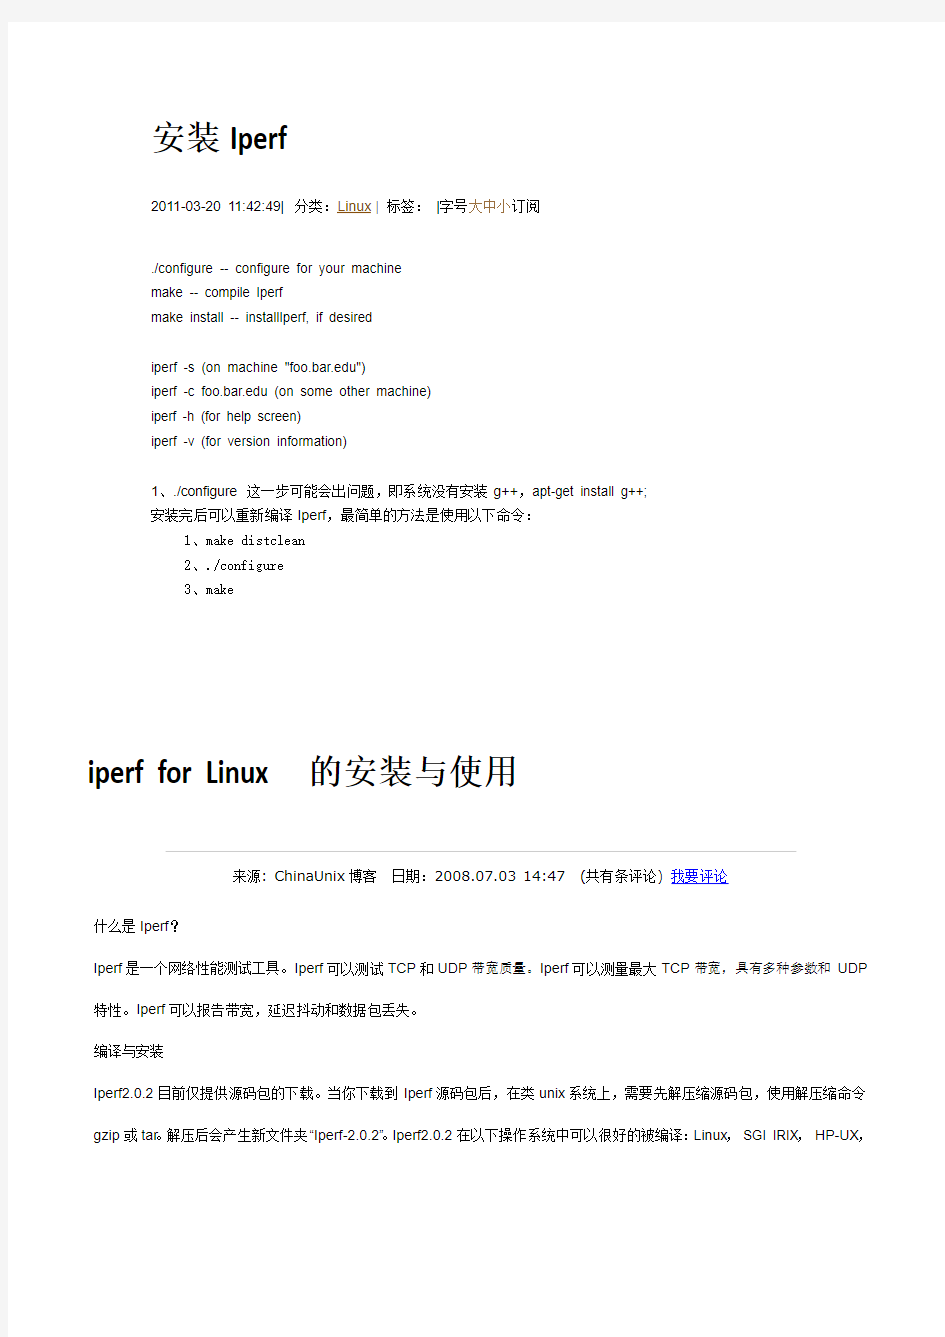 iperf for Linux 的安装与使用